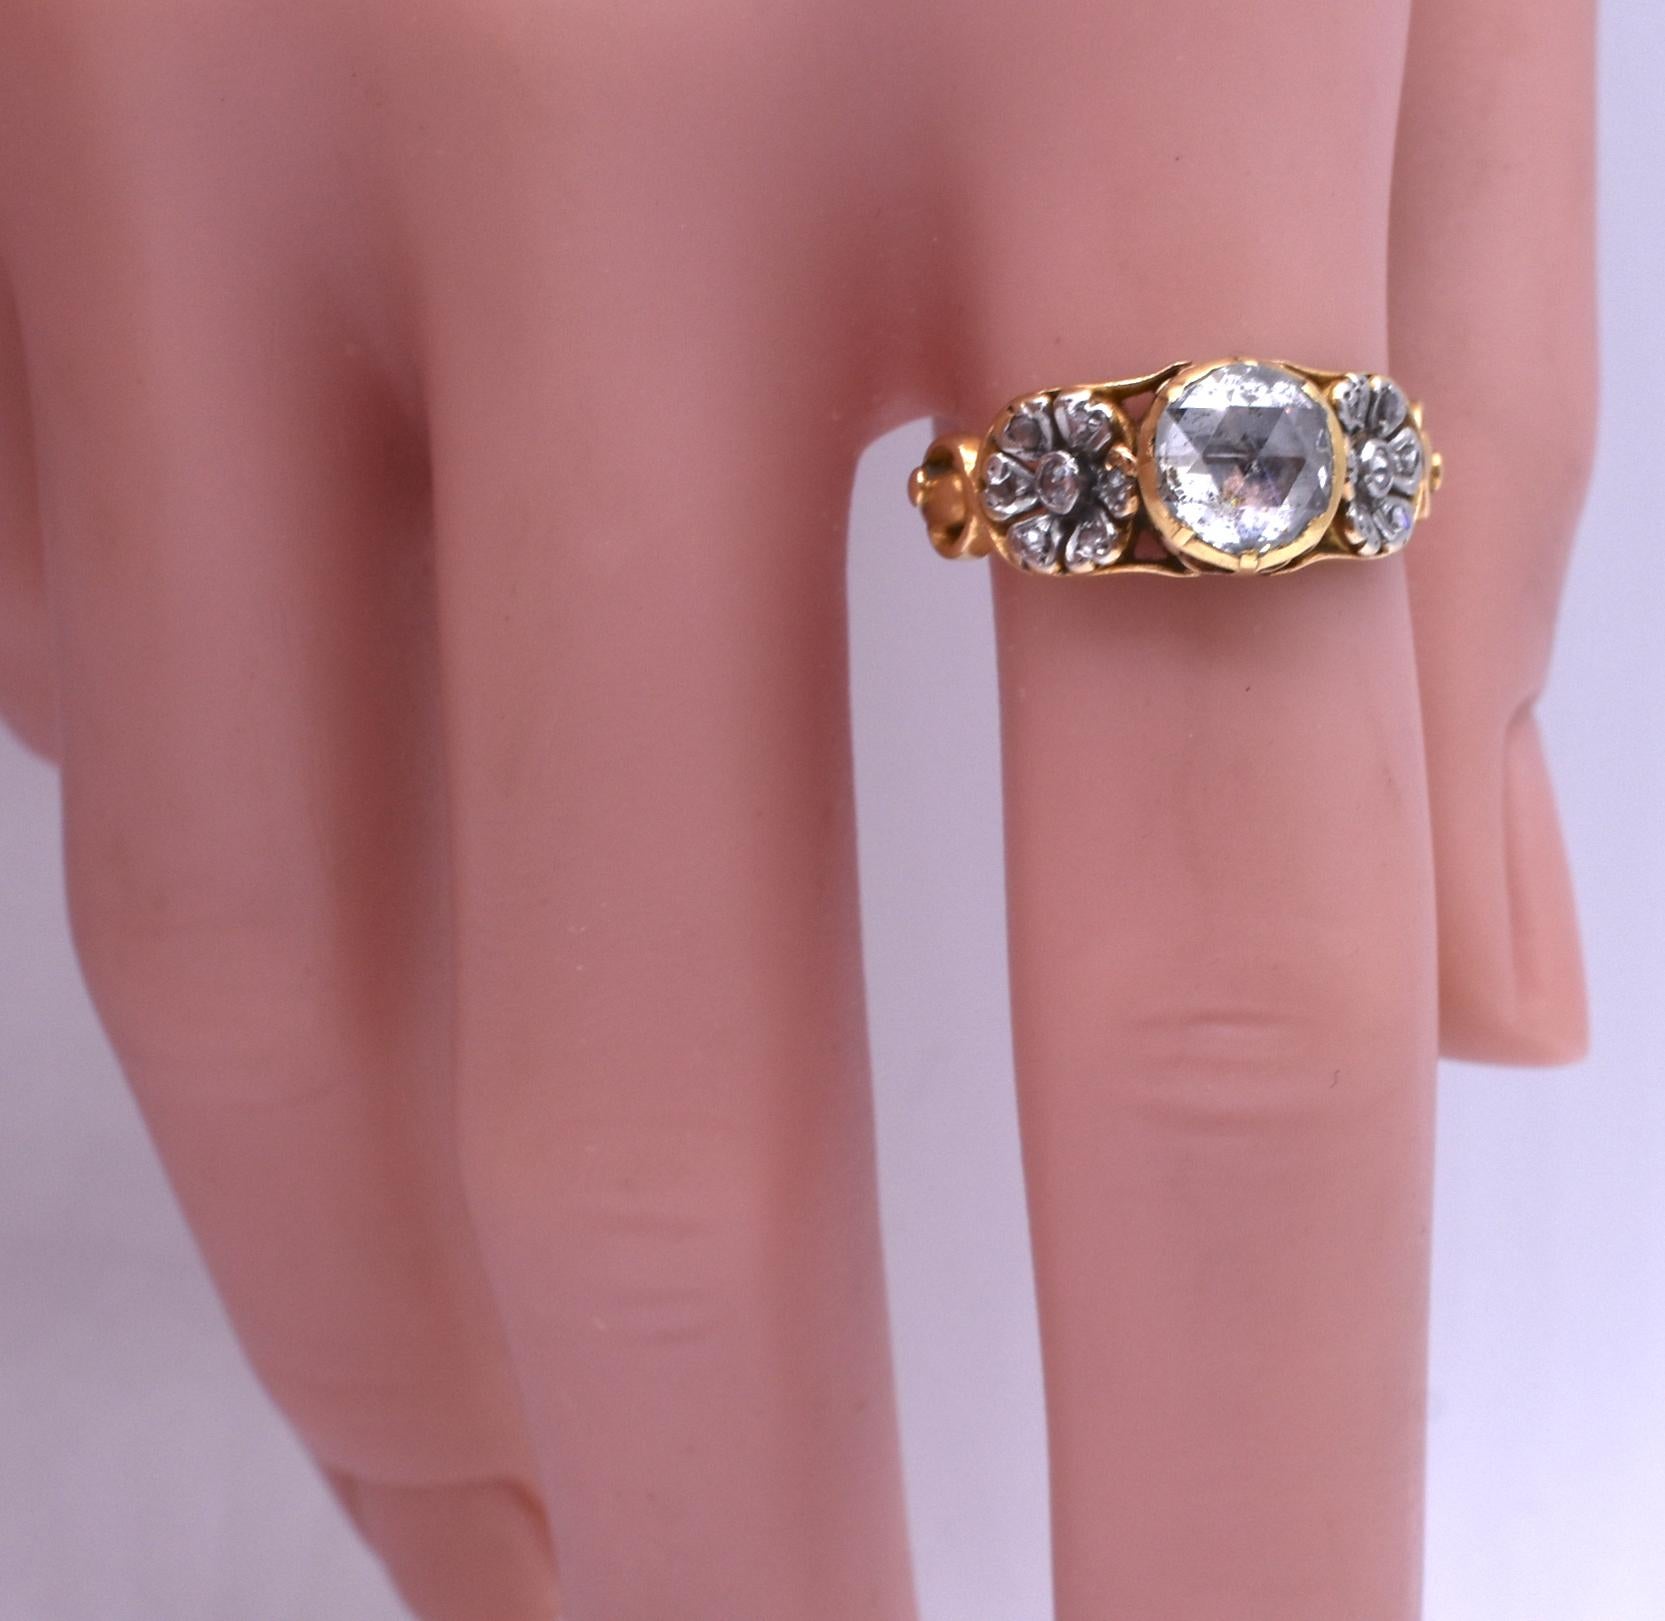 Antique Gold Rose Cut Diamond Ring with Platinum Floral Shoulders, C1895 2